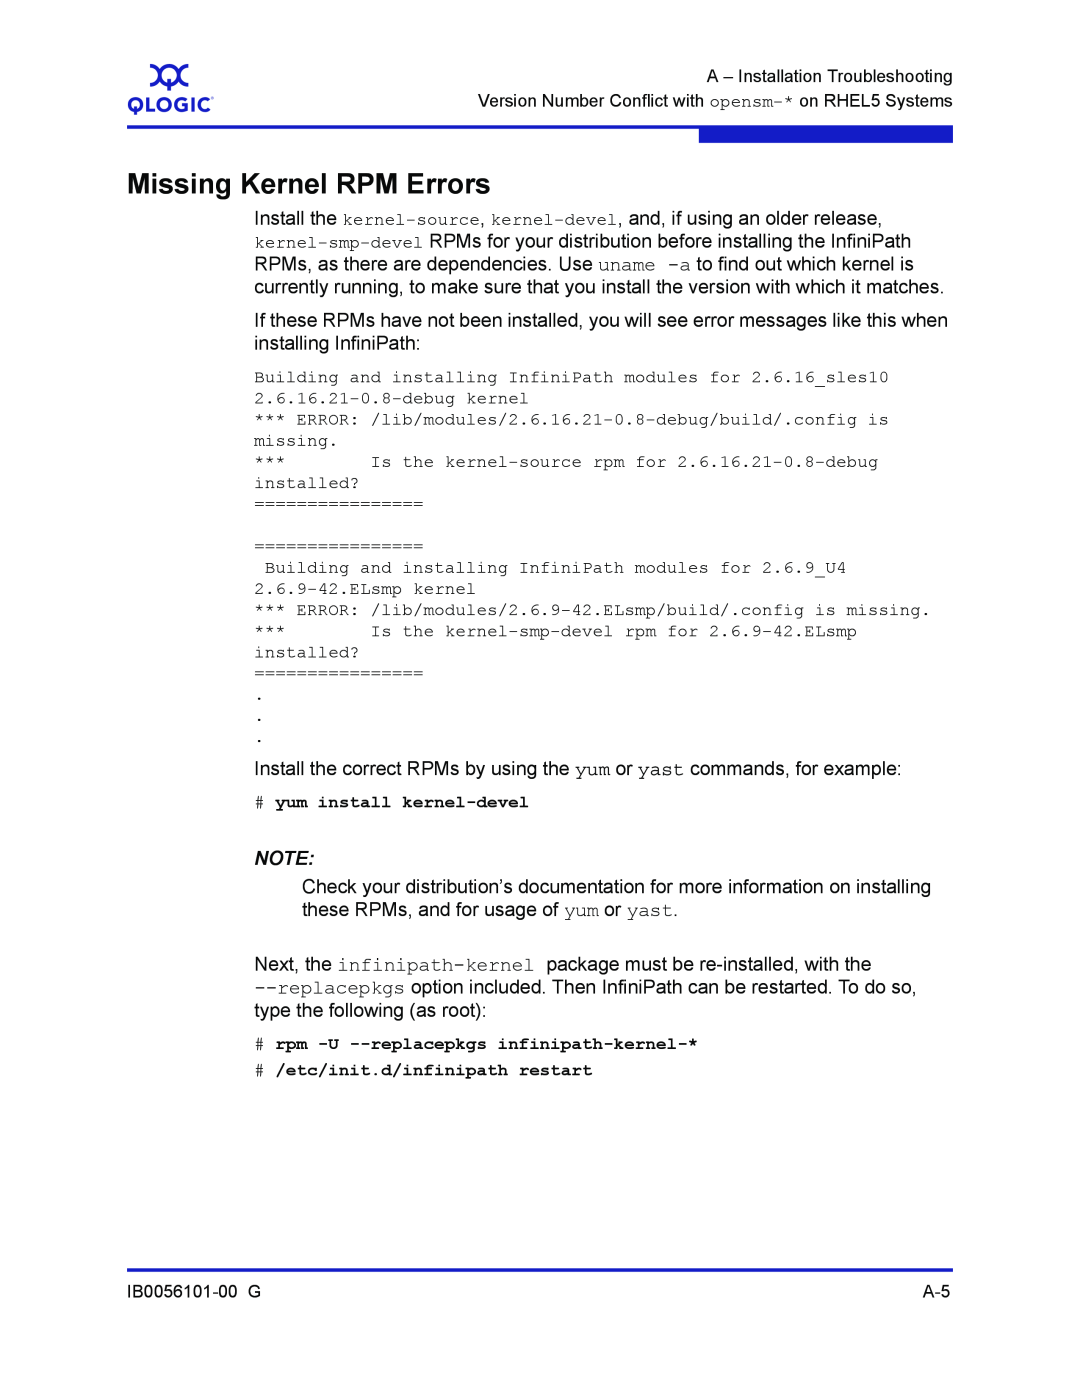 Q-Logic IB0056101-00 G manual Missing Kernel RPM Errors 